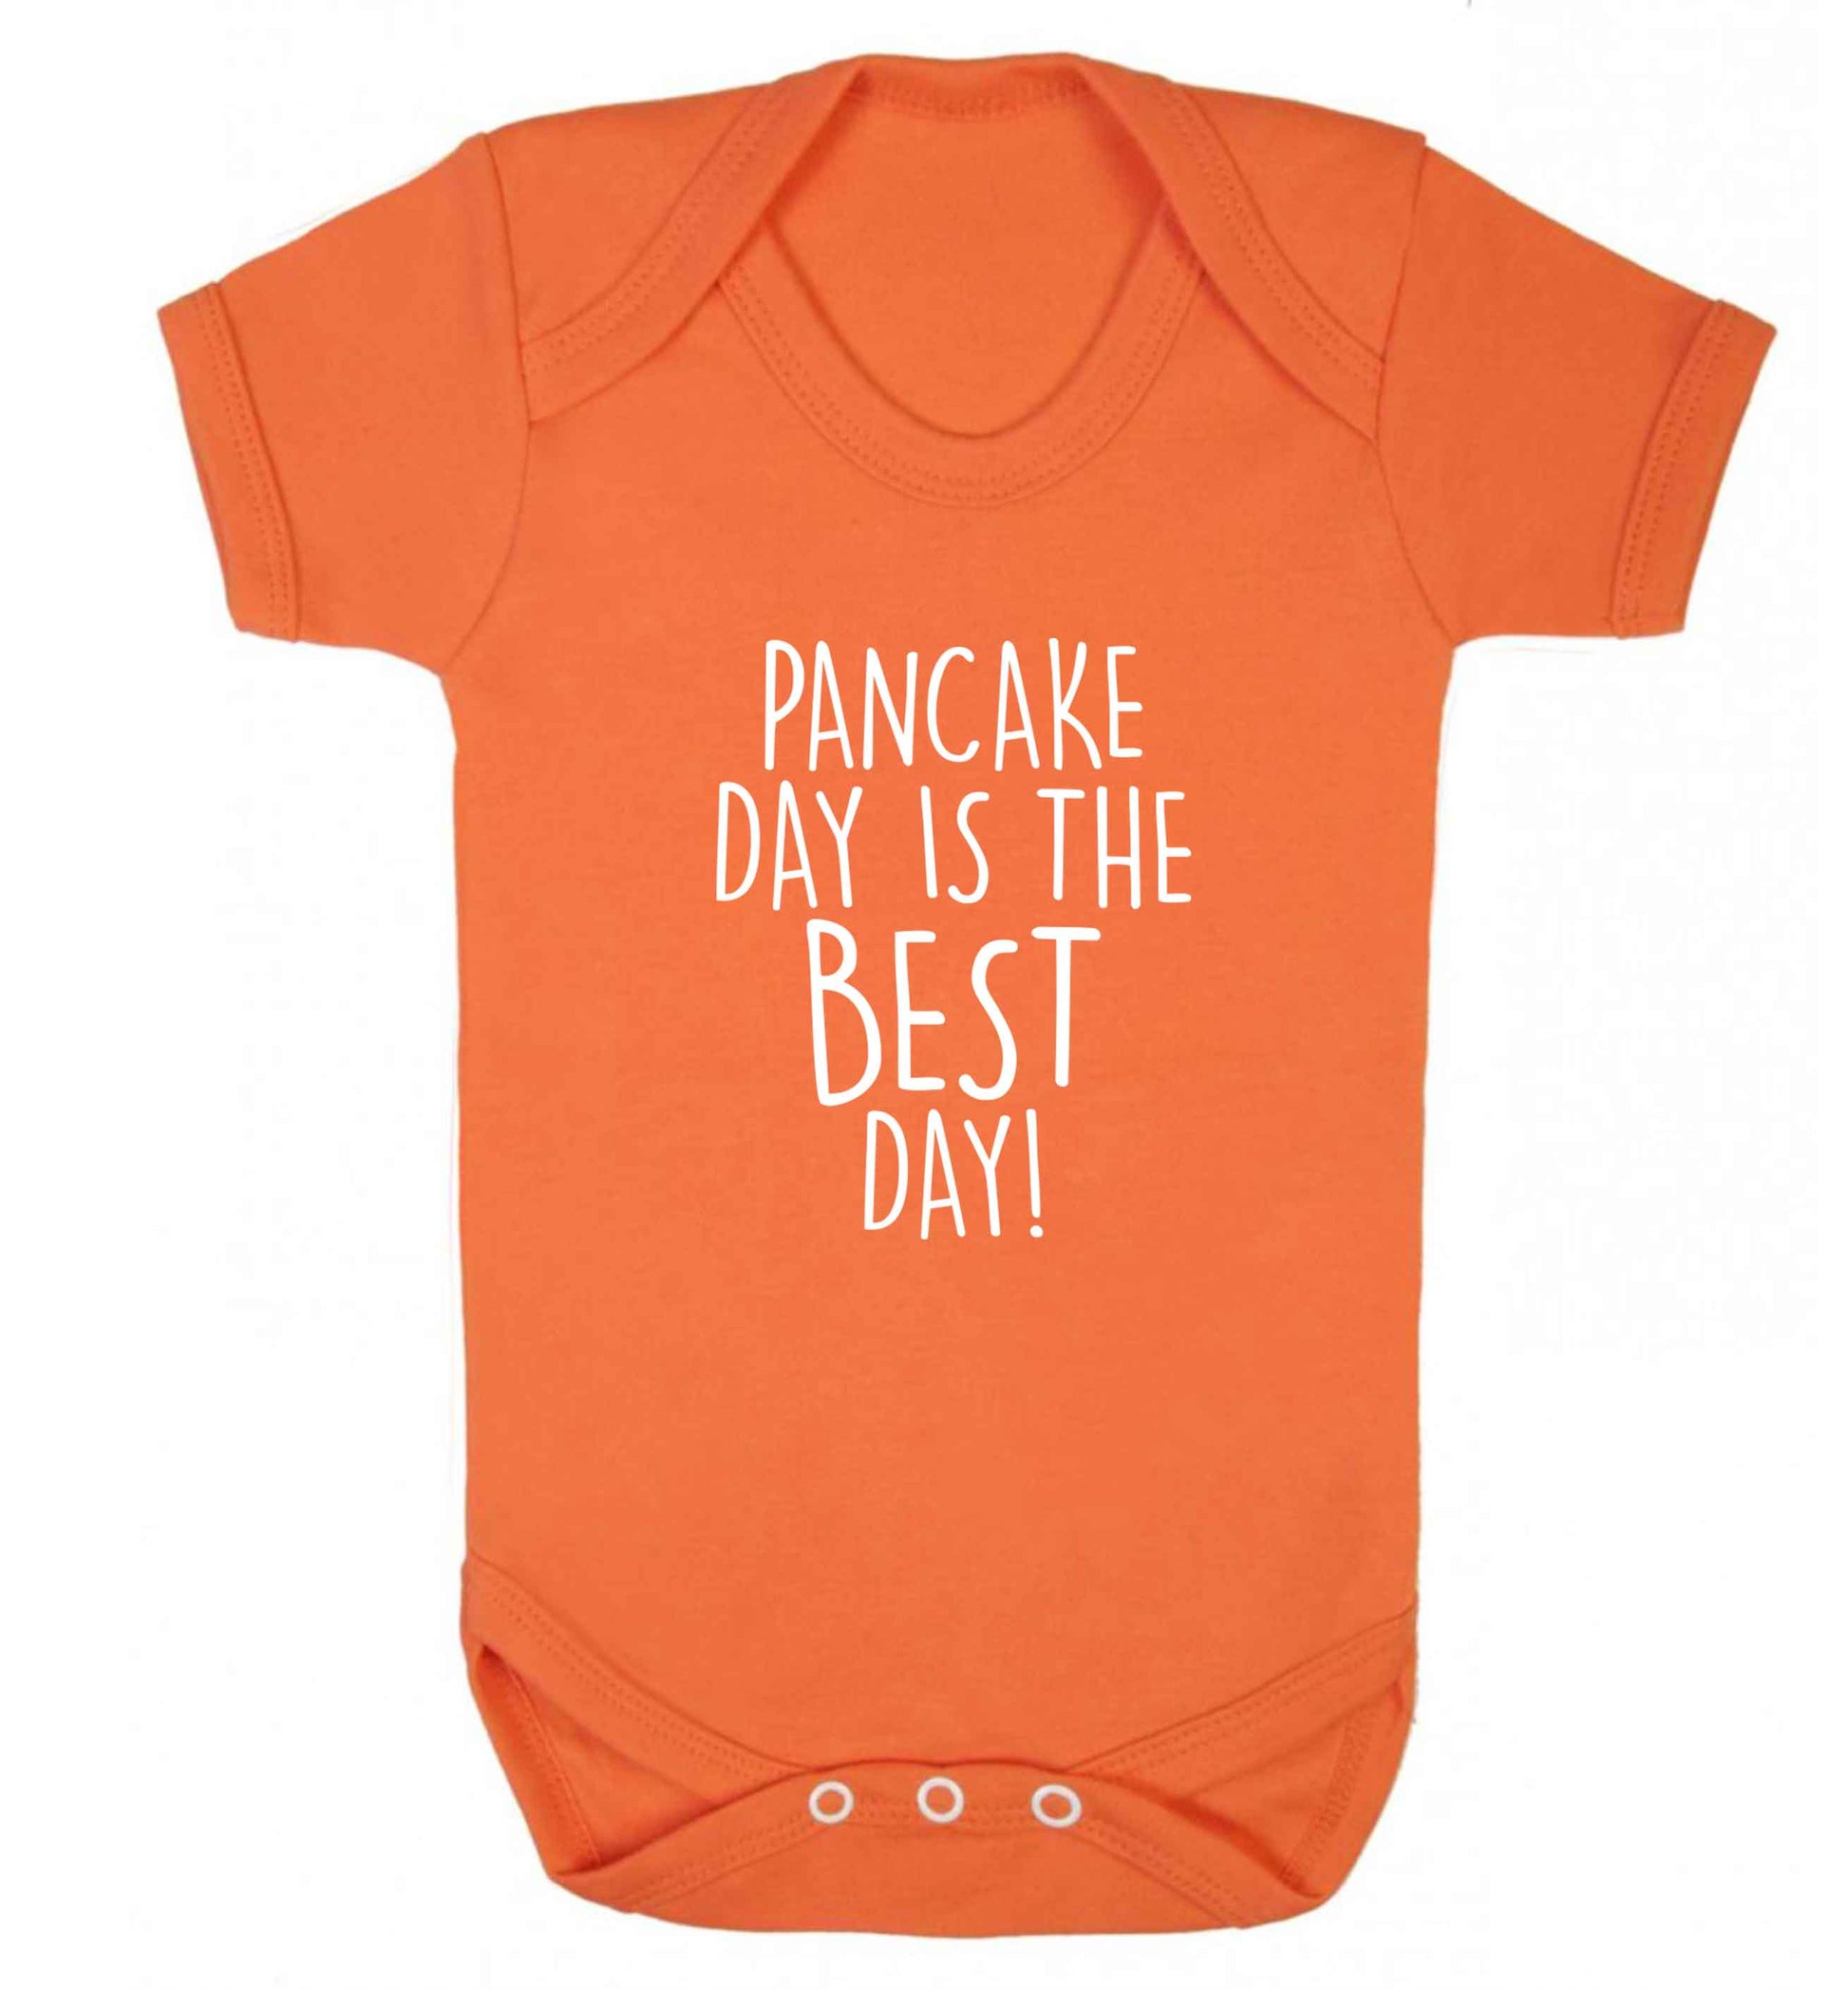 Pancake day is the best day baby vest orange 18-24 months